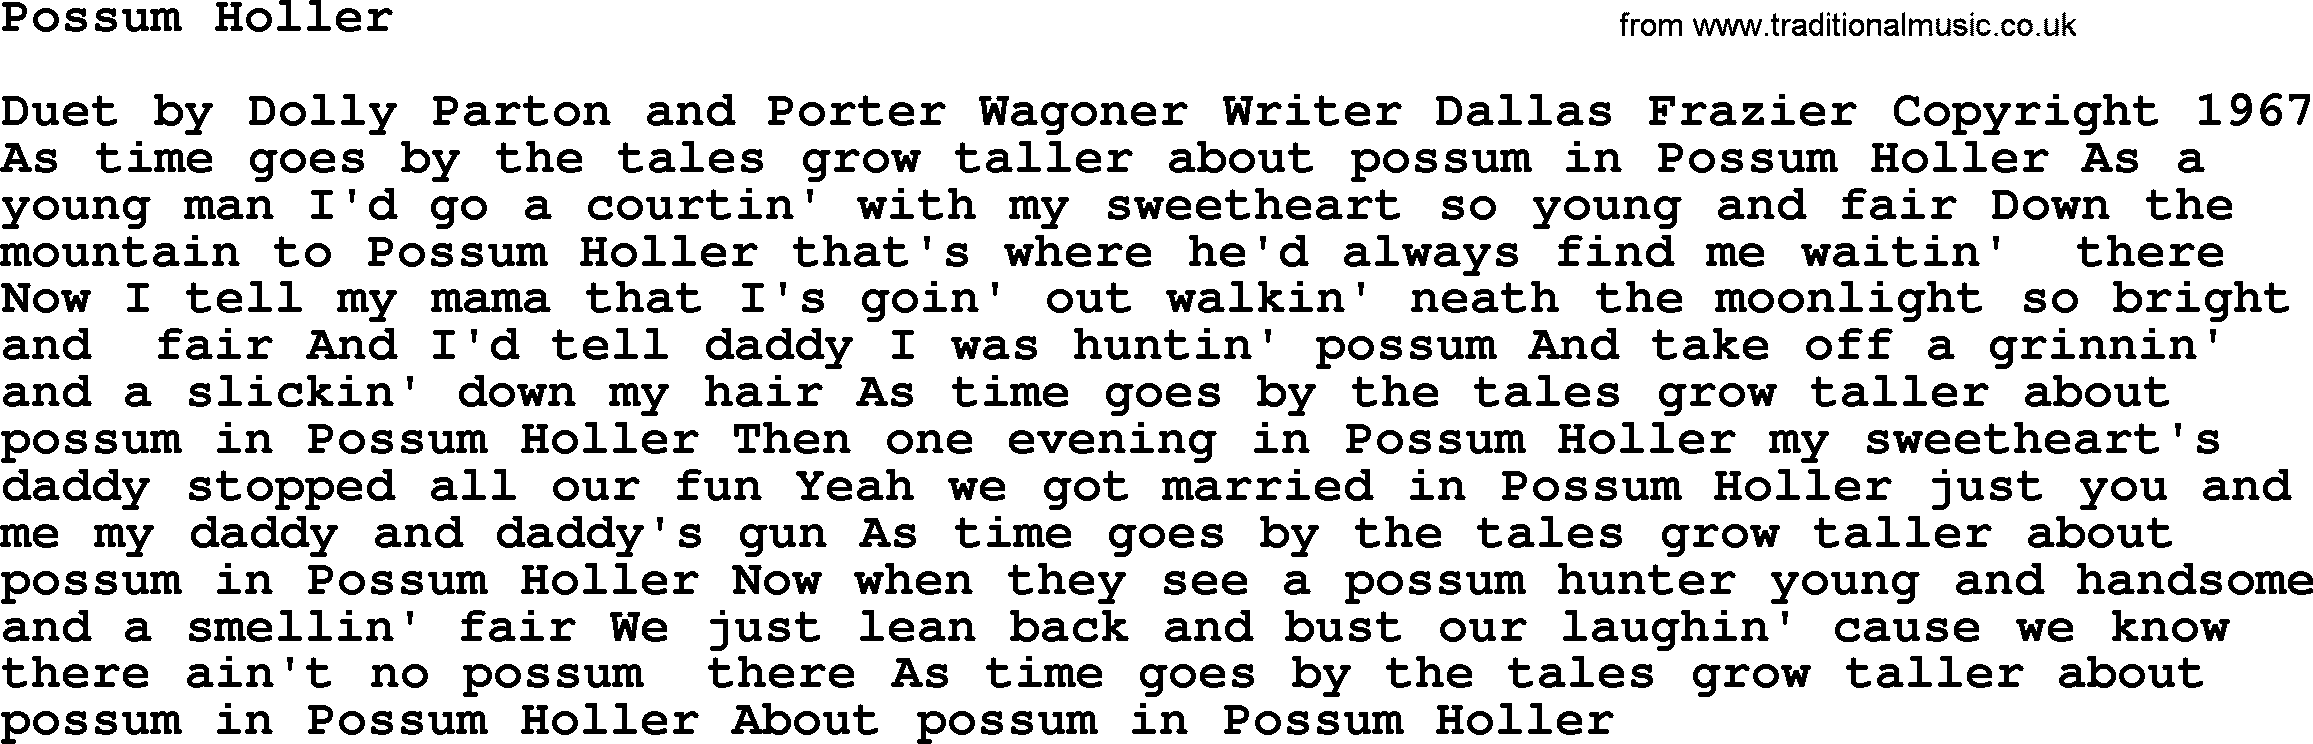 Dolly Parton song Possum Holler.txt lyrics